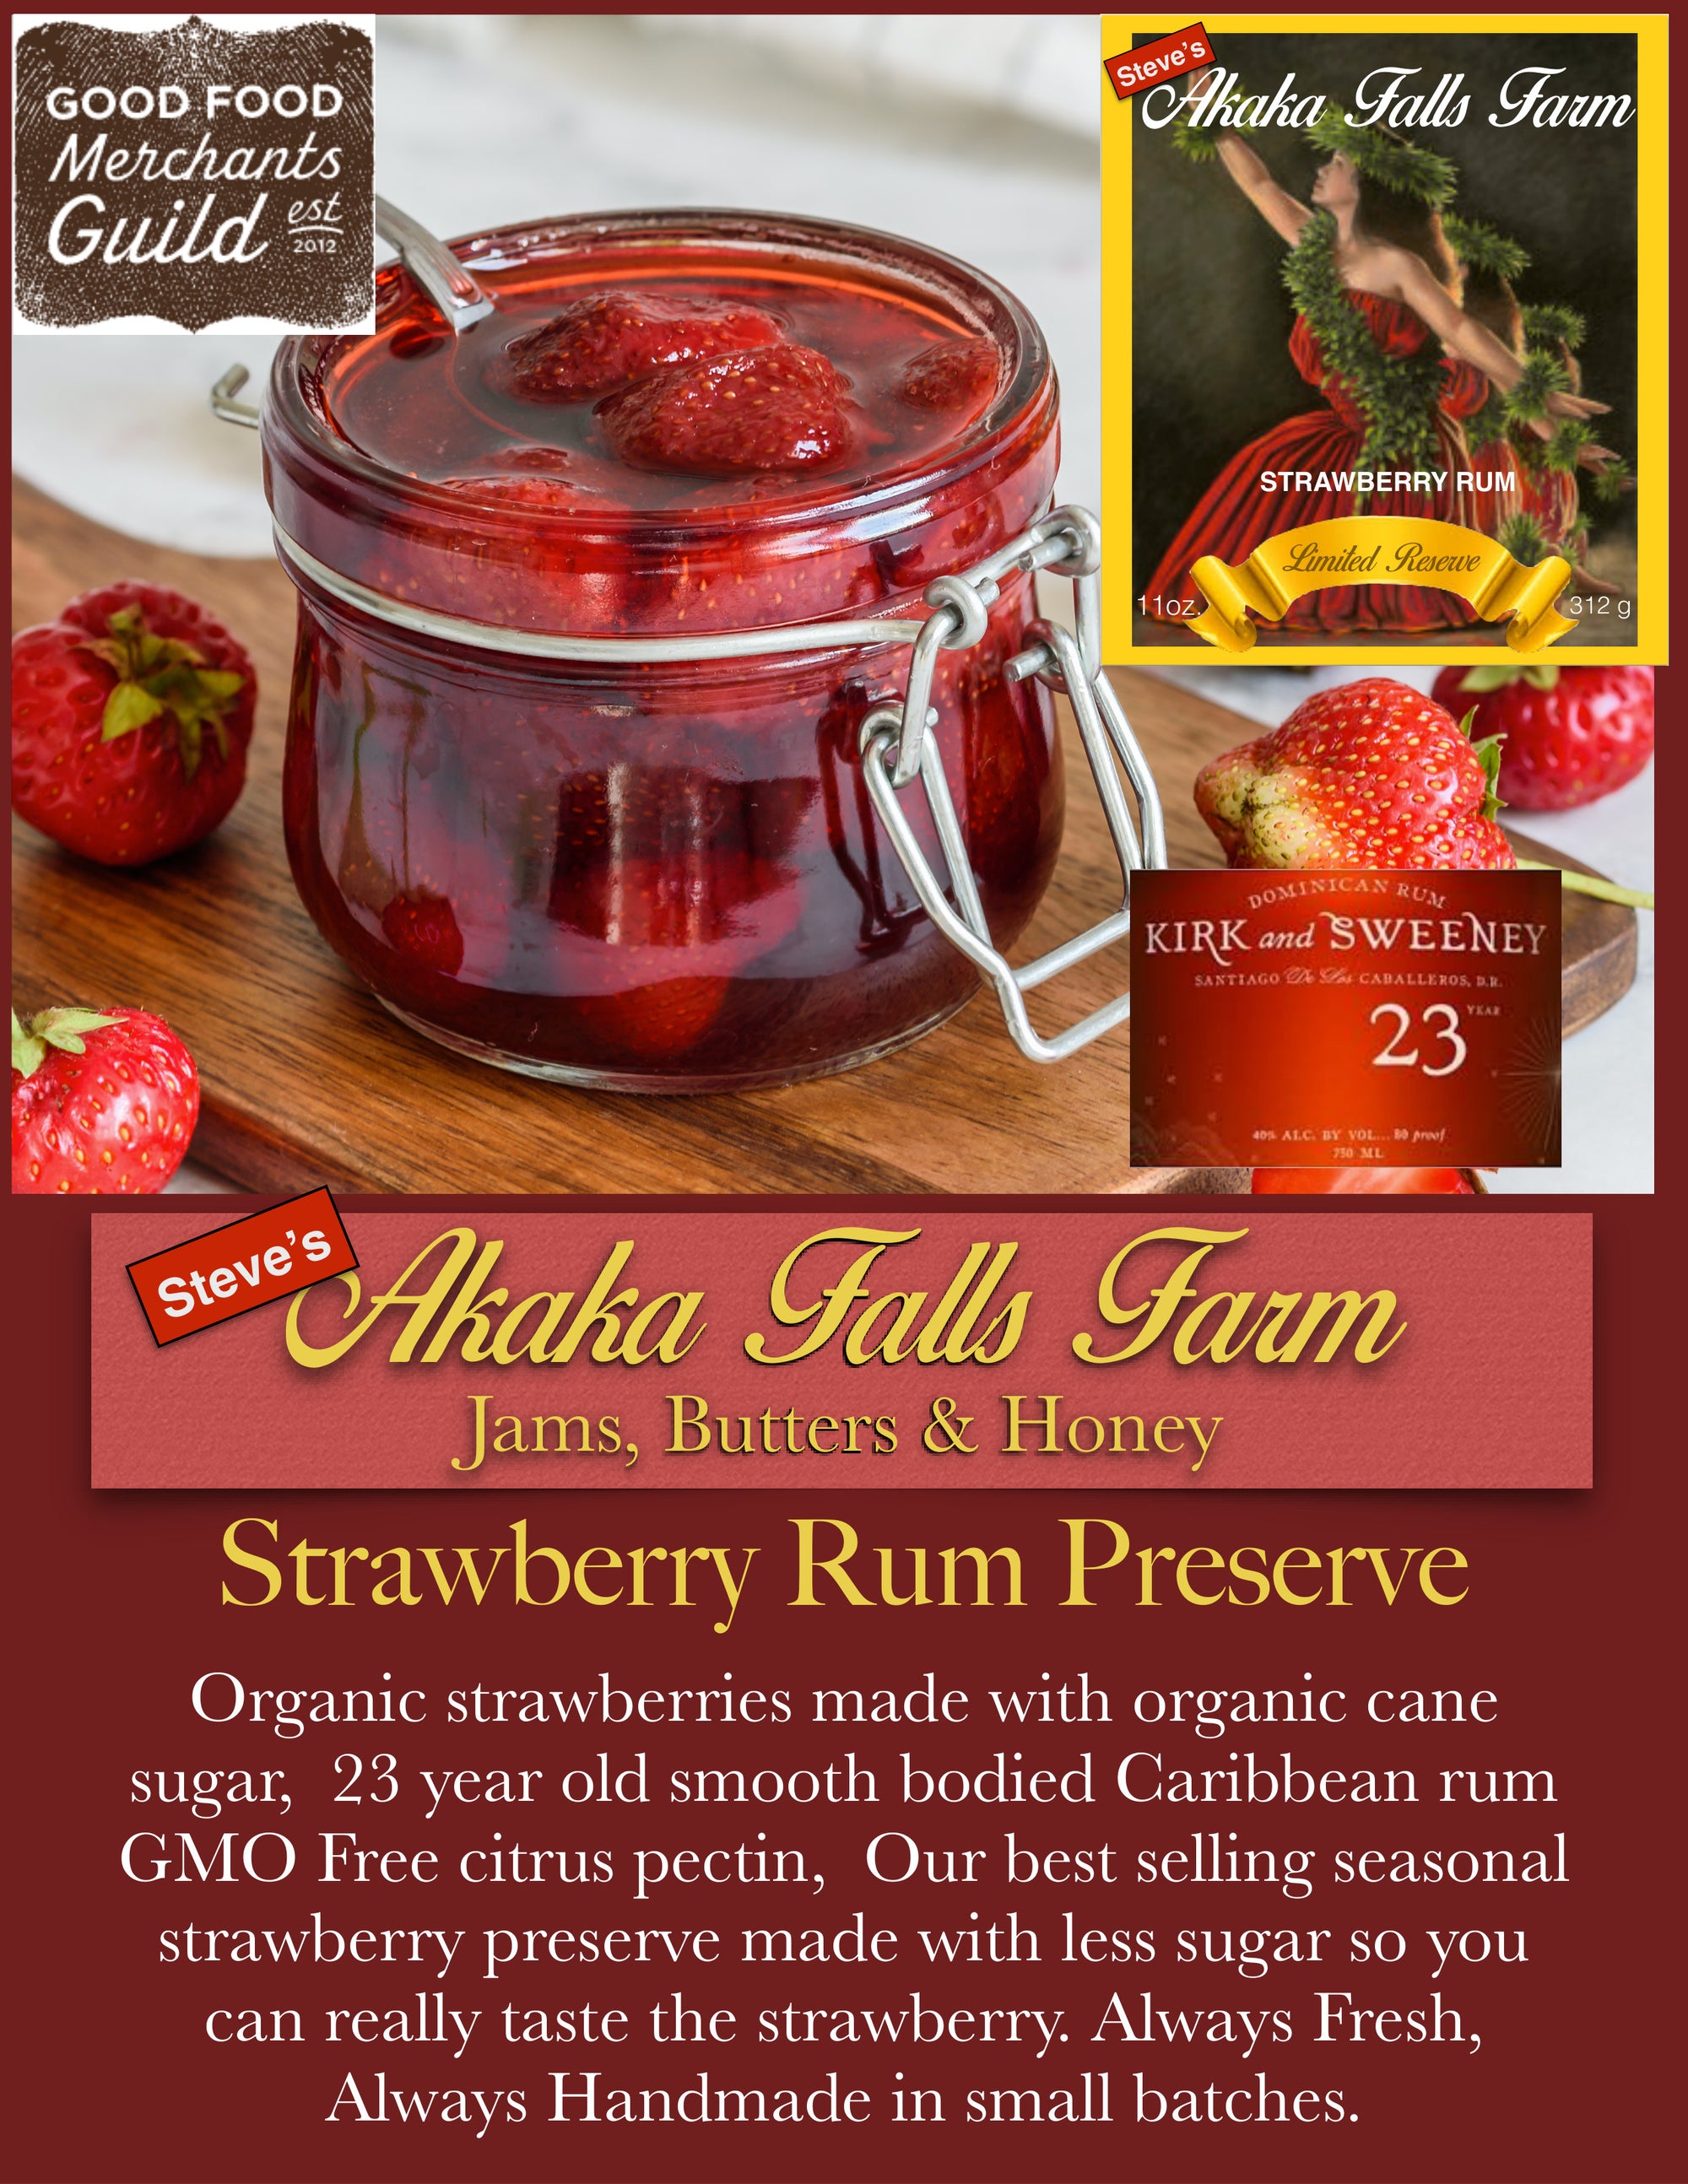 Pop-Up Mākeke - Akaka Falls Farm - Strawberry Rum Preserve - Information